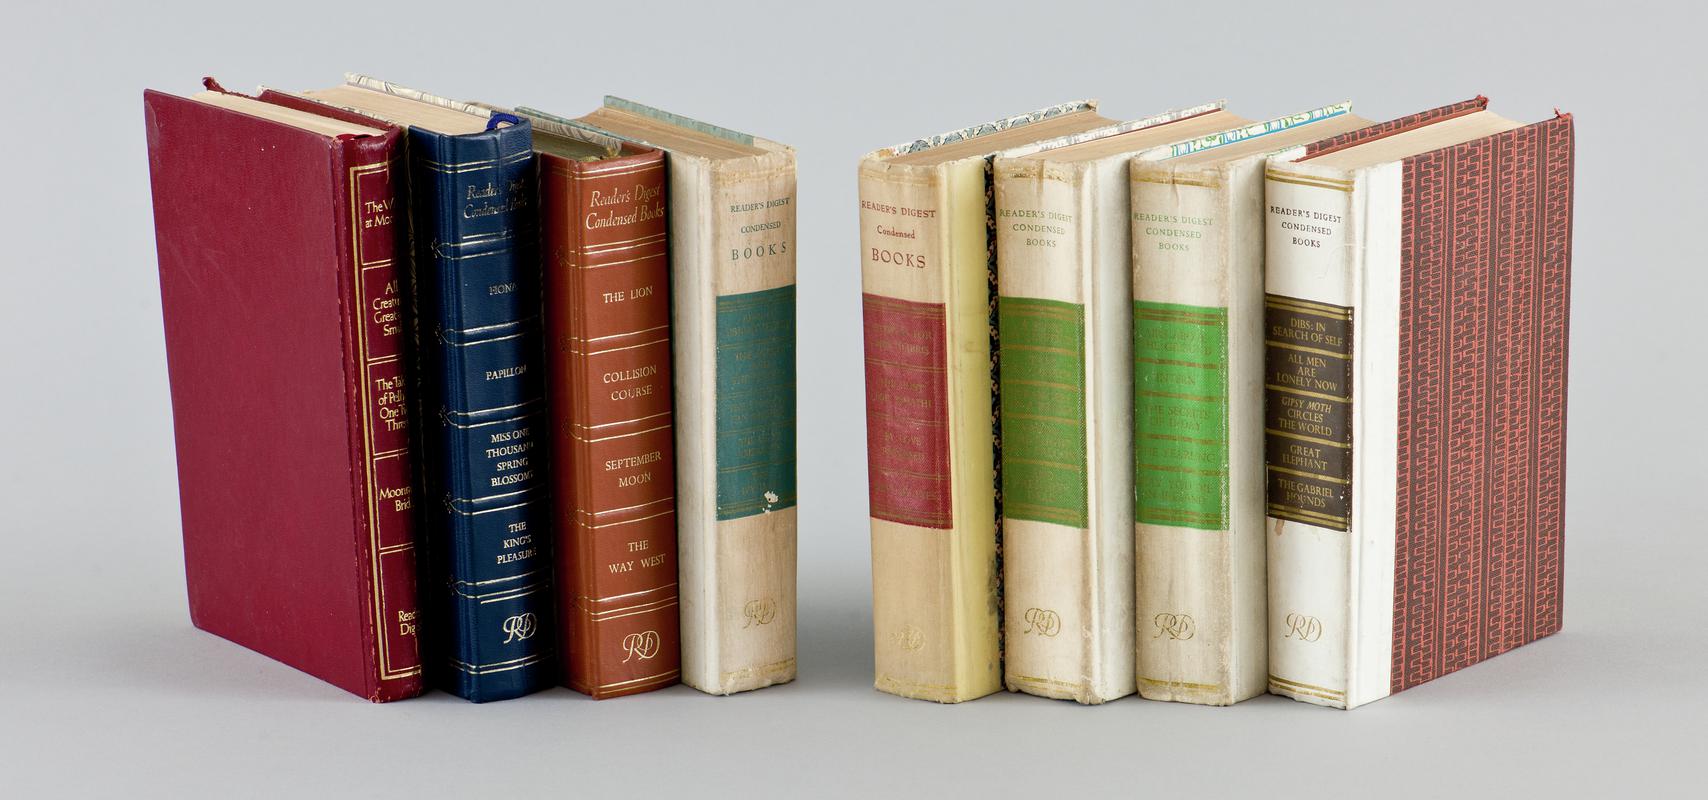 Series of Reader's Digest Condensed Books.